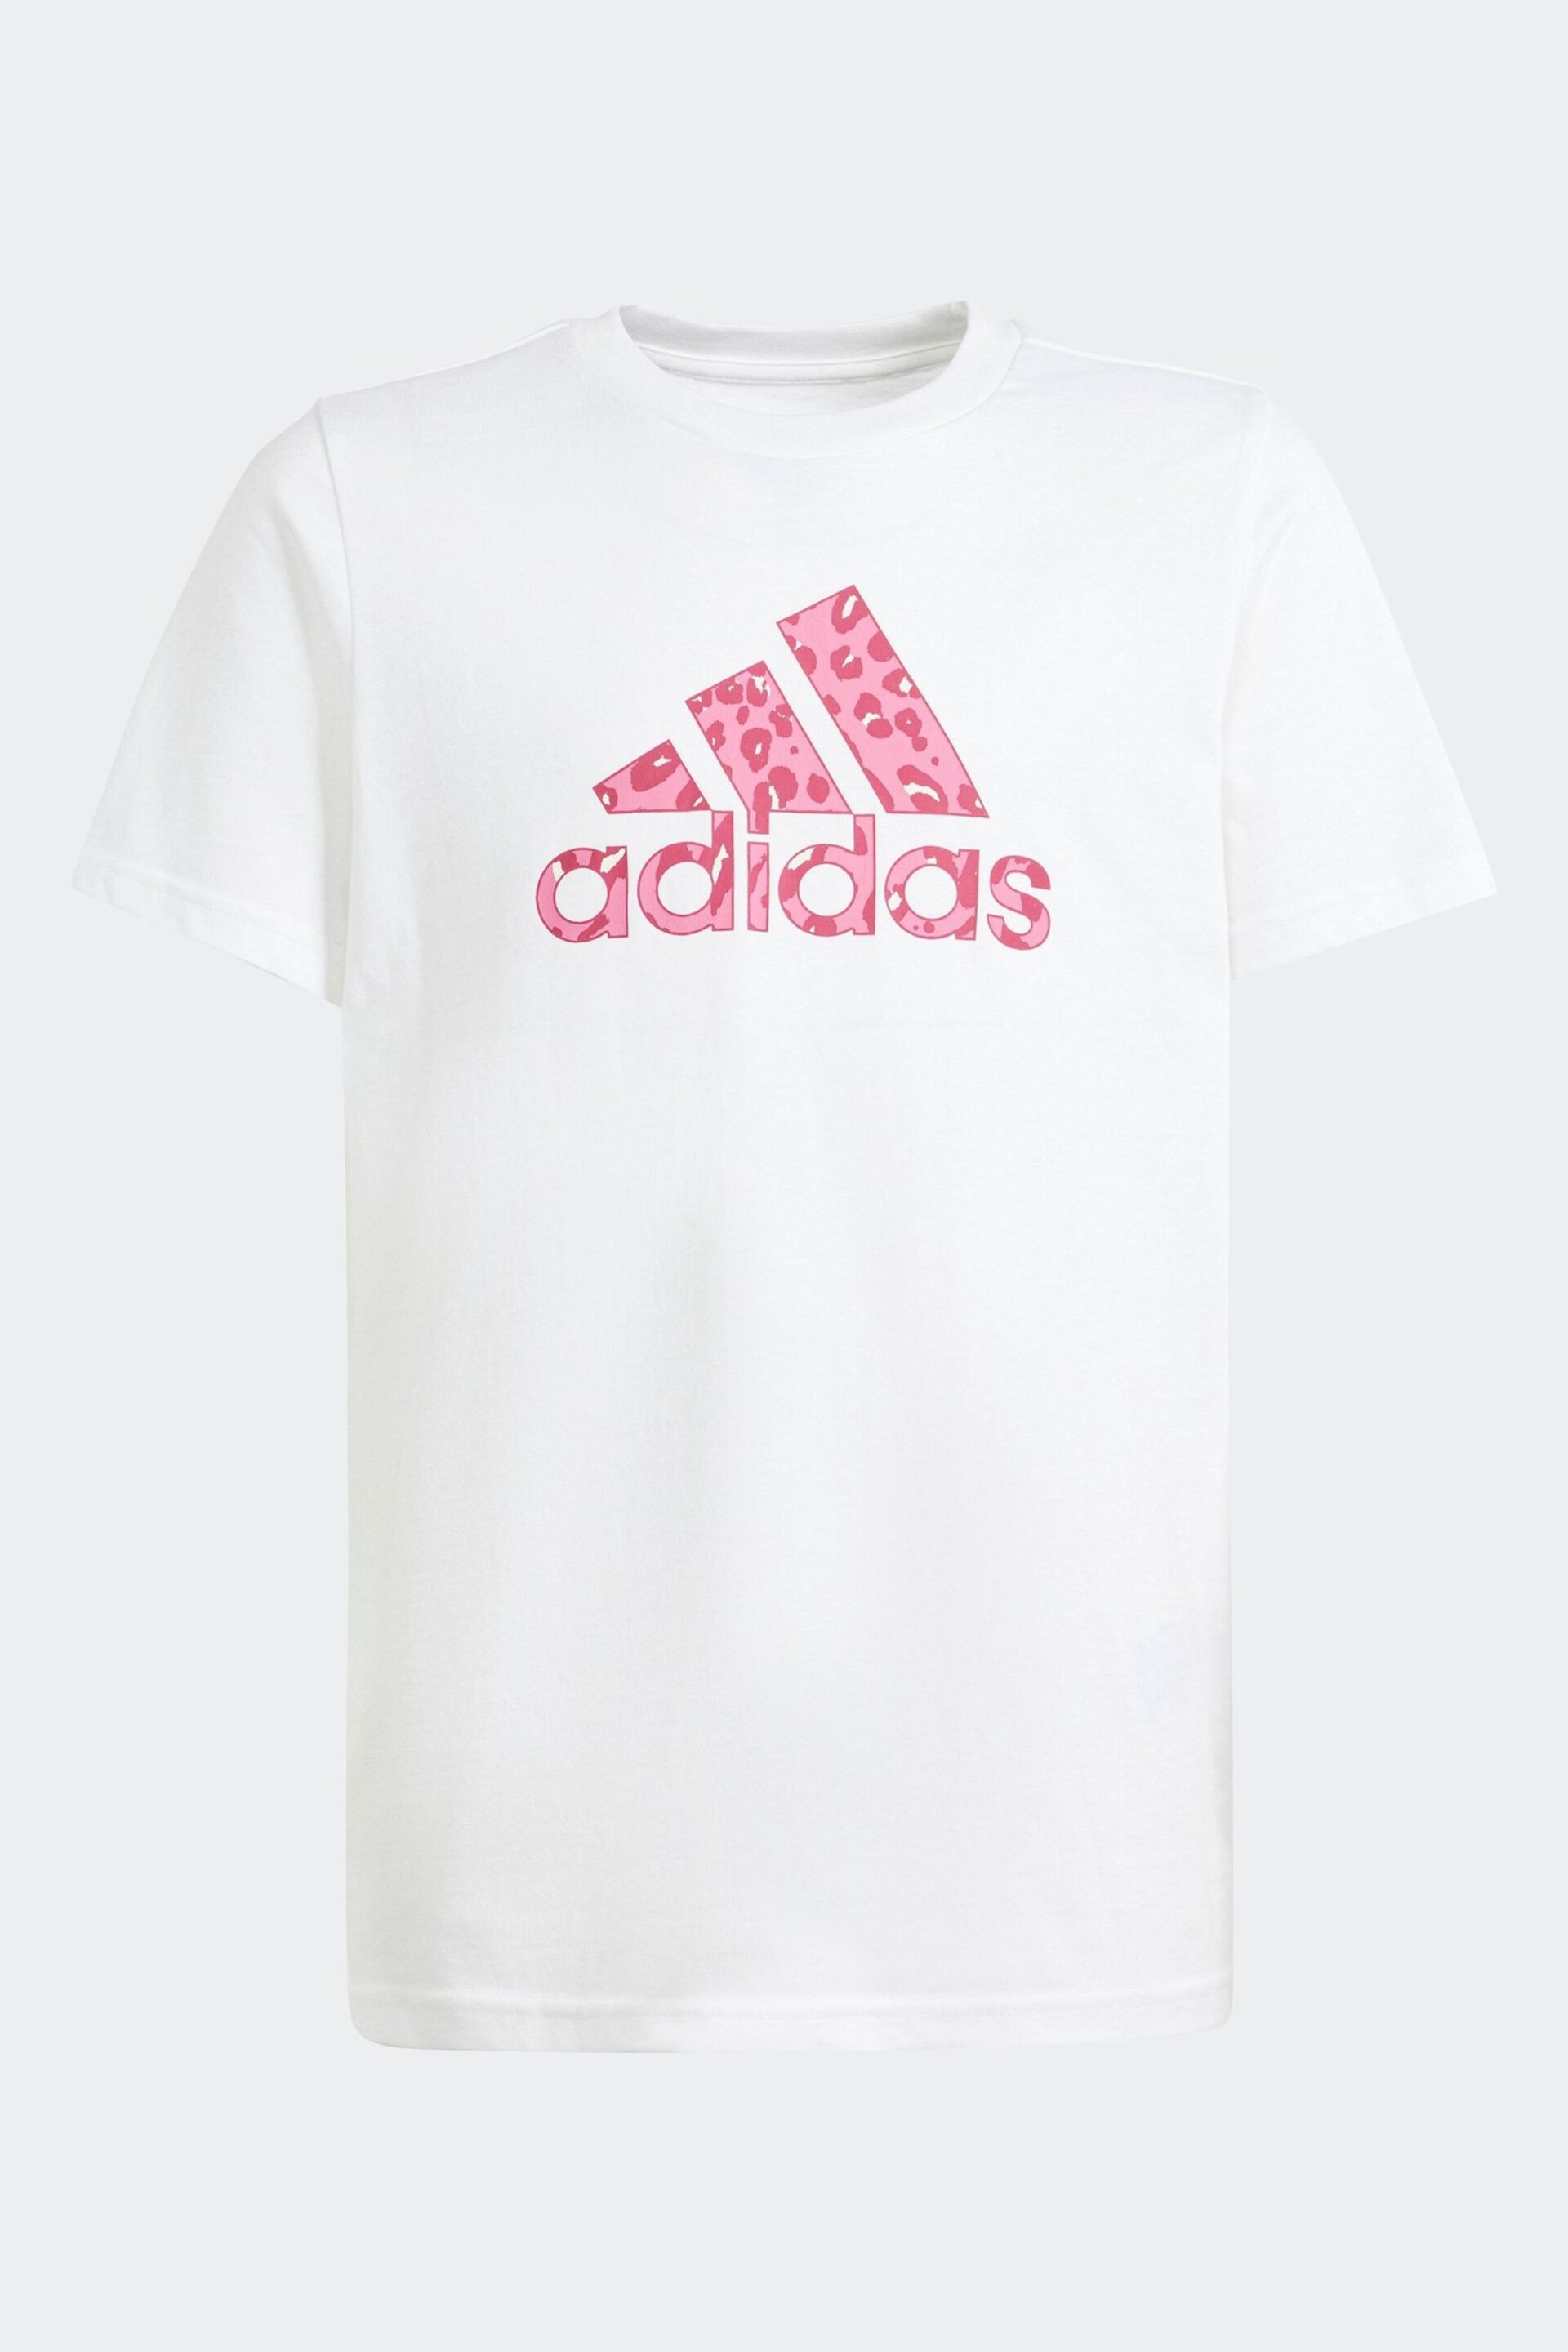 adidas White Kids Sportswear Animal Print Graphic T-Shirt - Image 1 of 5